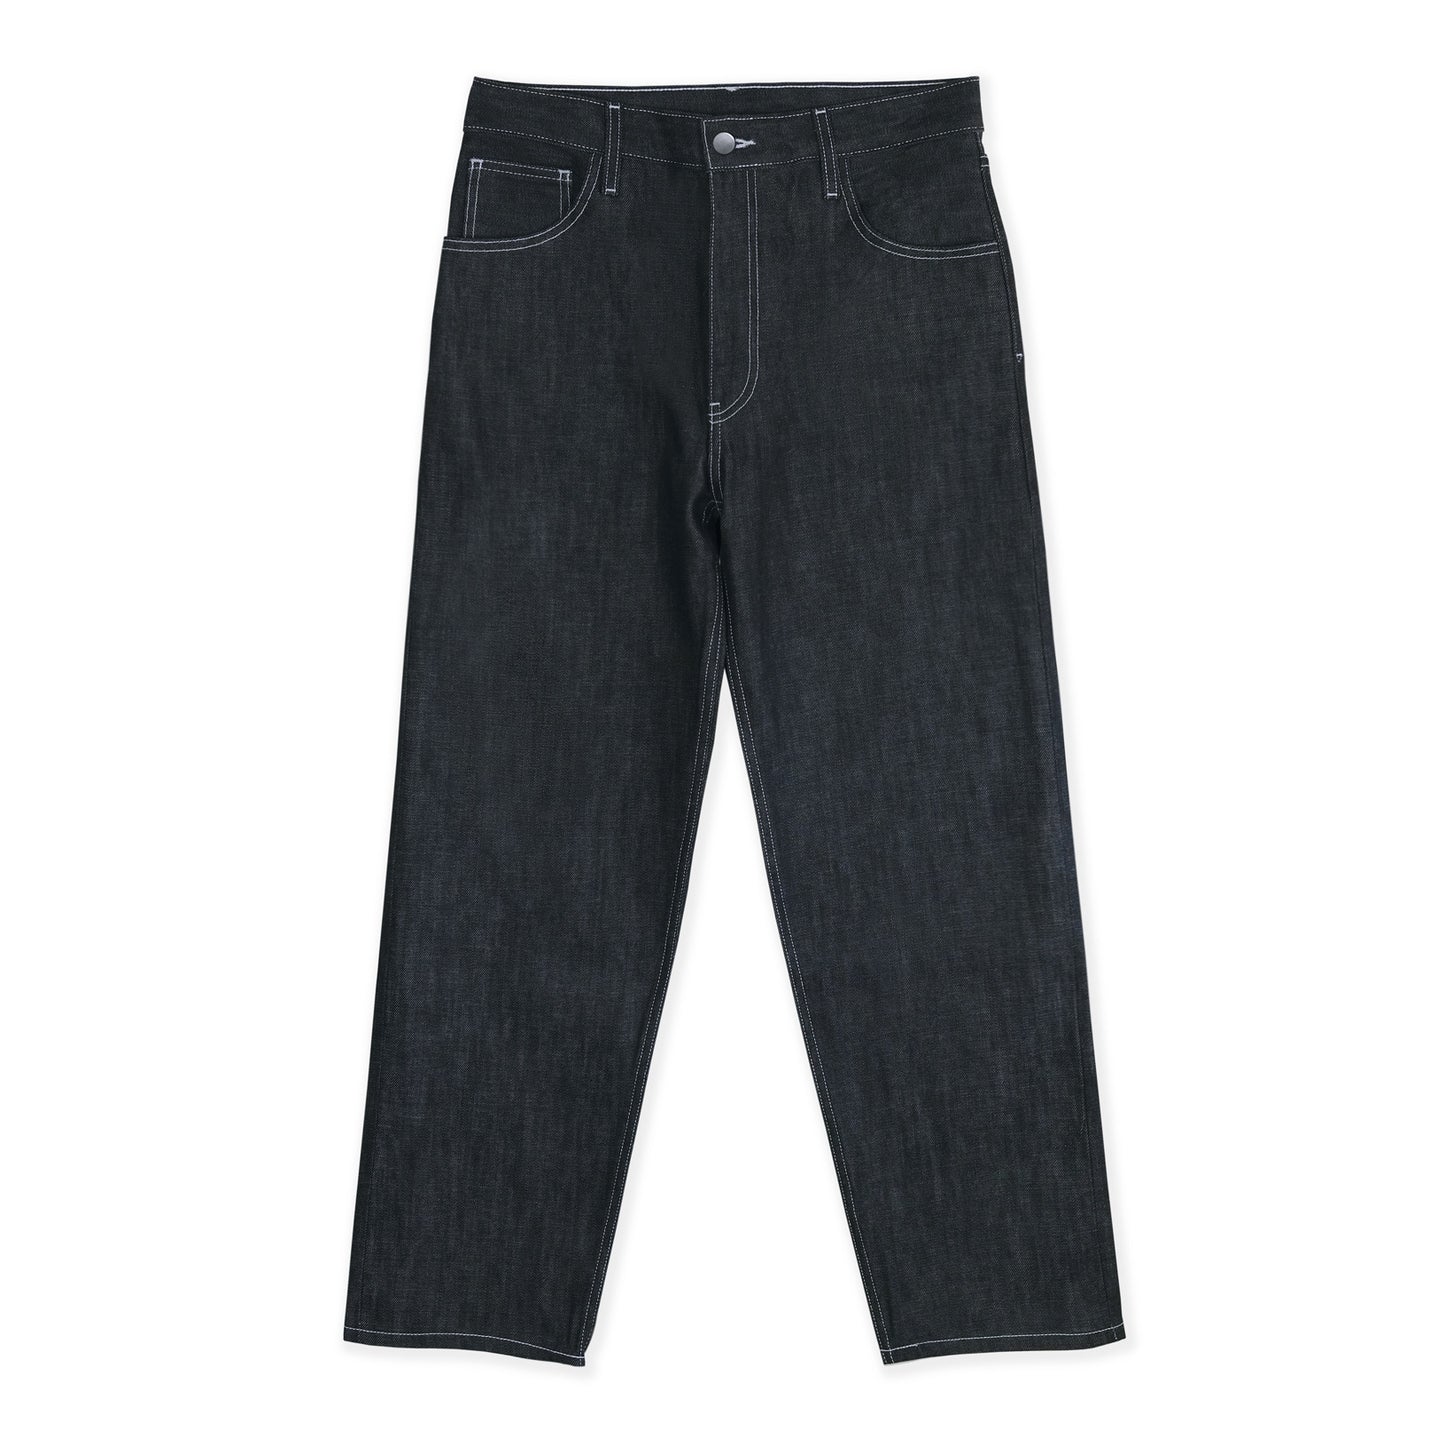 11oz Denim Fabric Enzyme Washed Jeans Cotton Material - 168cm wide -  Classic BLACK Denim